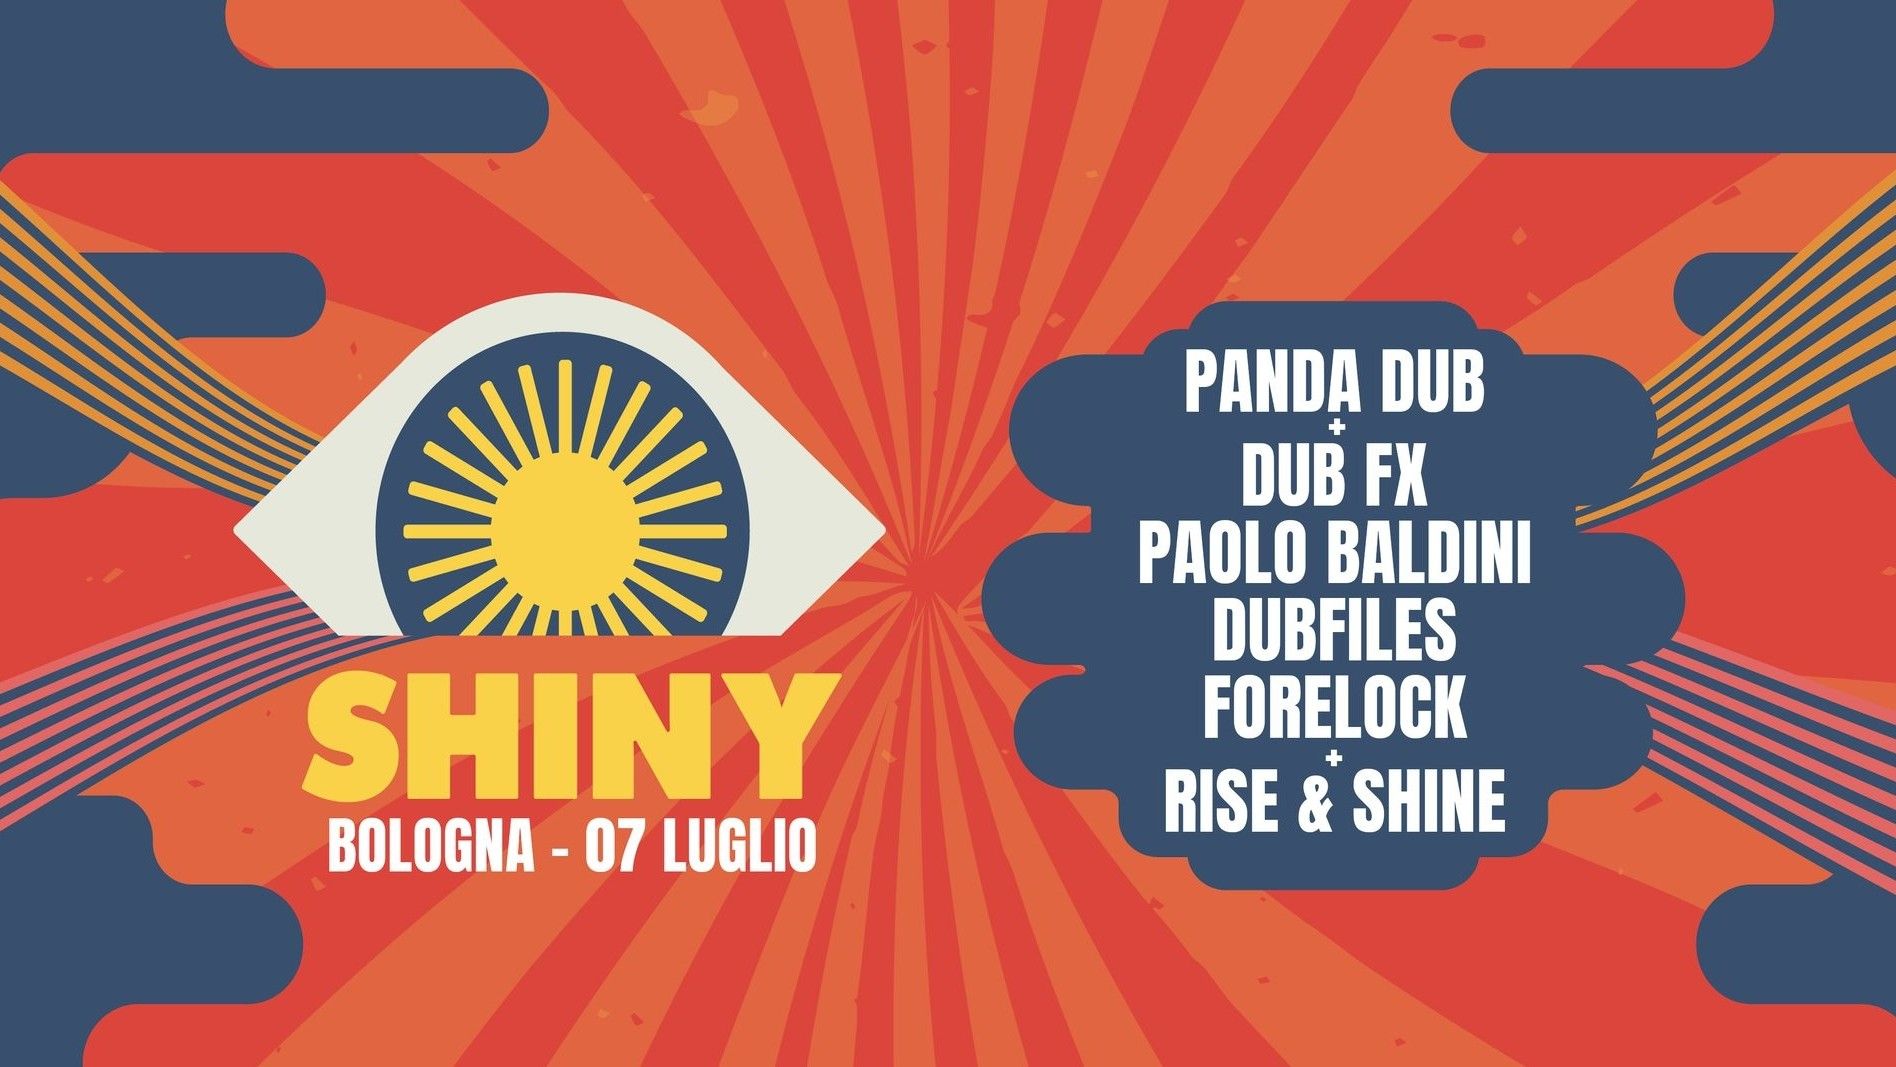 Shiny Festival | Panda Dub, Dub Fx, Paolo Baldini, Forelock, Rise & Shine